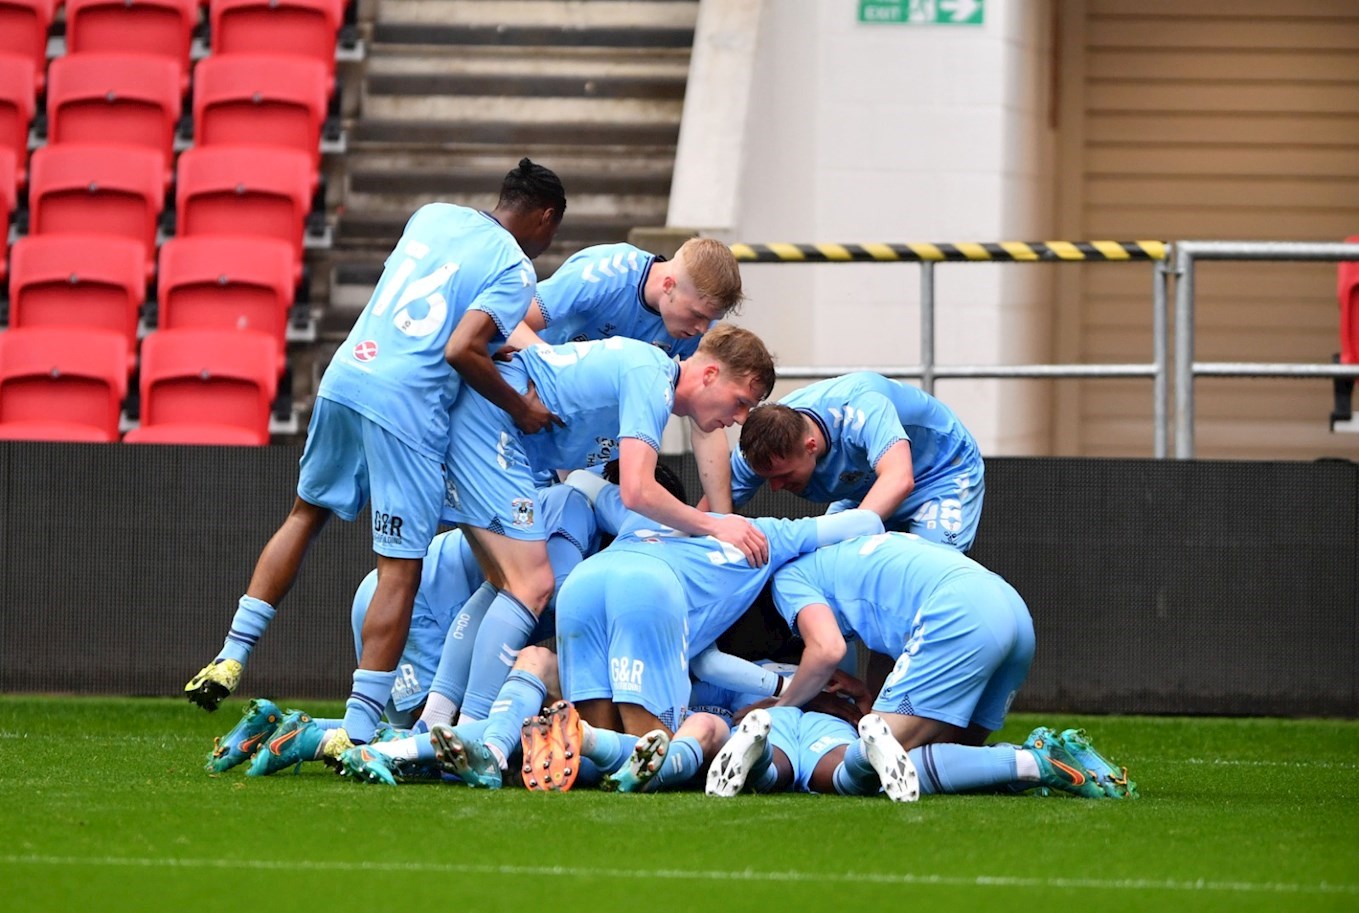 REPORT: Bristol City 2-3 Sky Blues - News - Coventry City